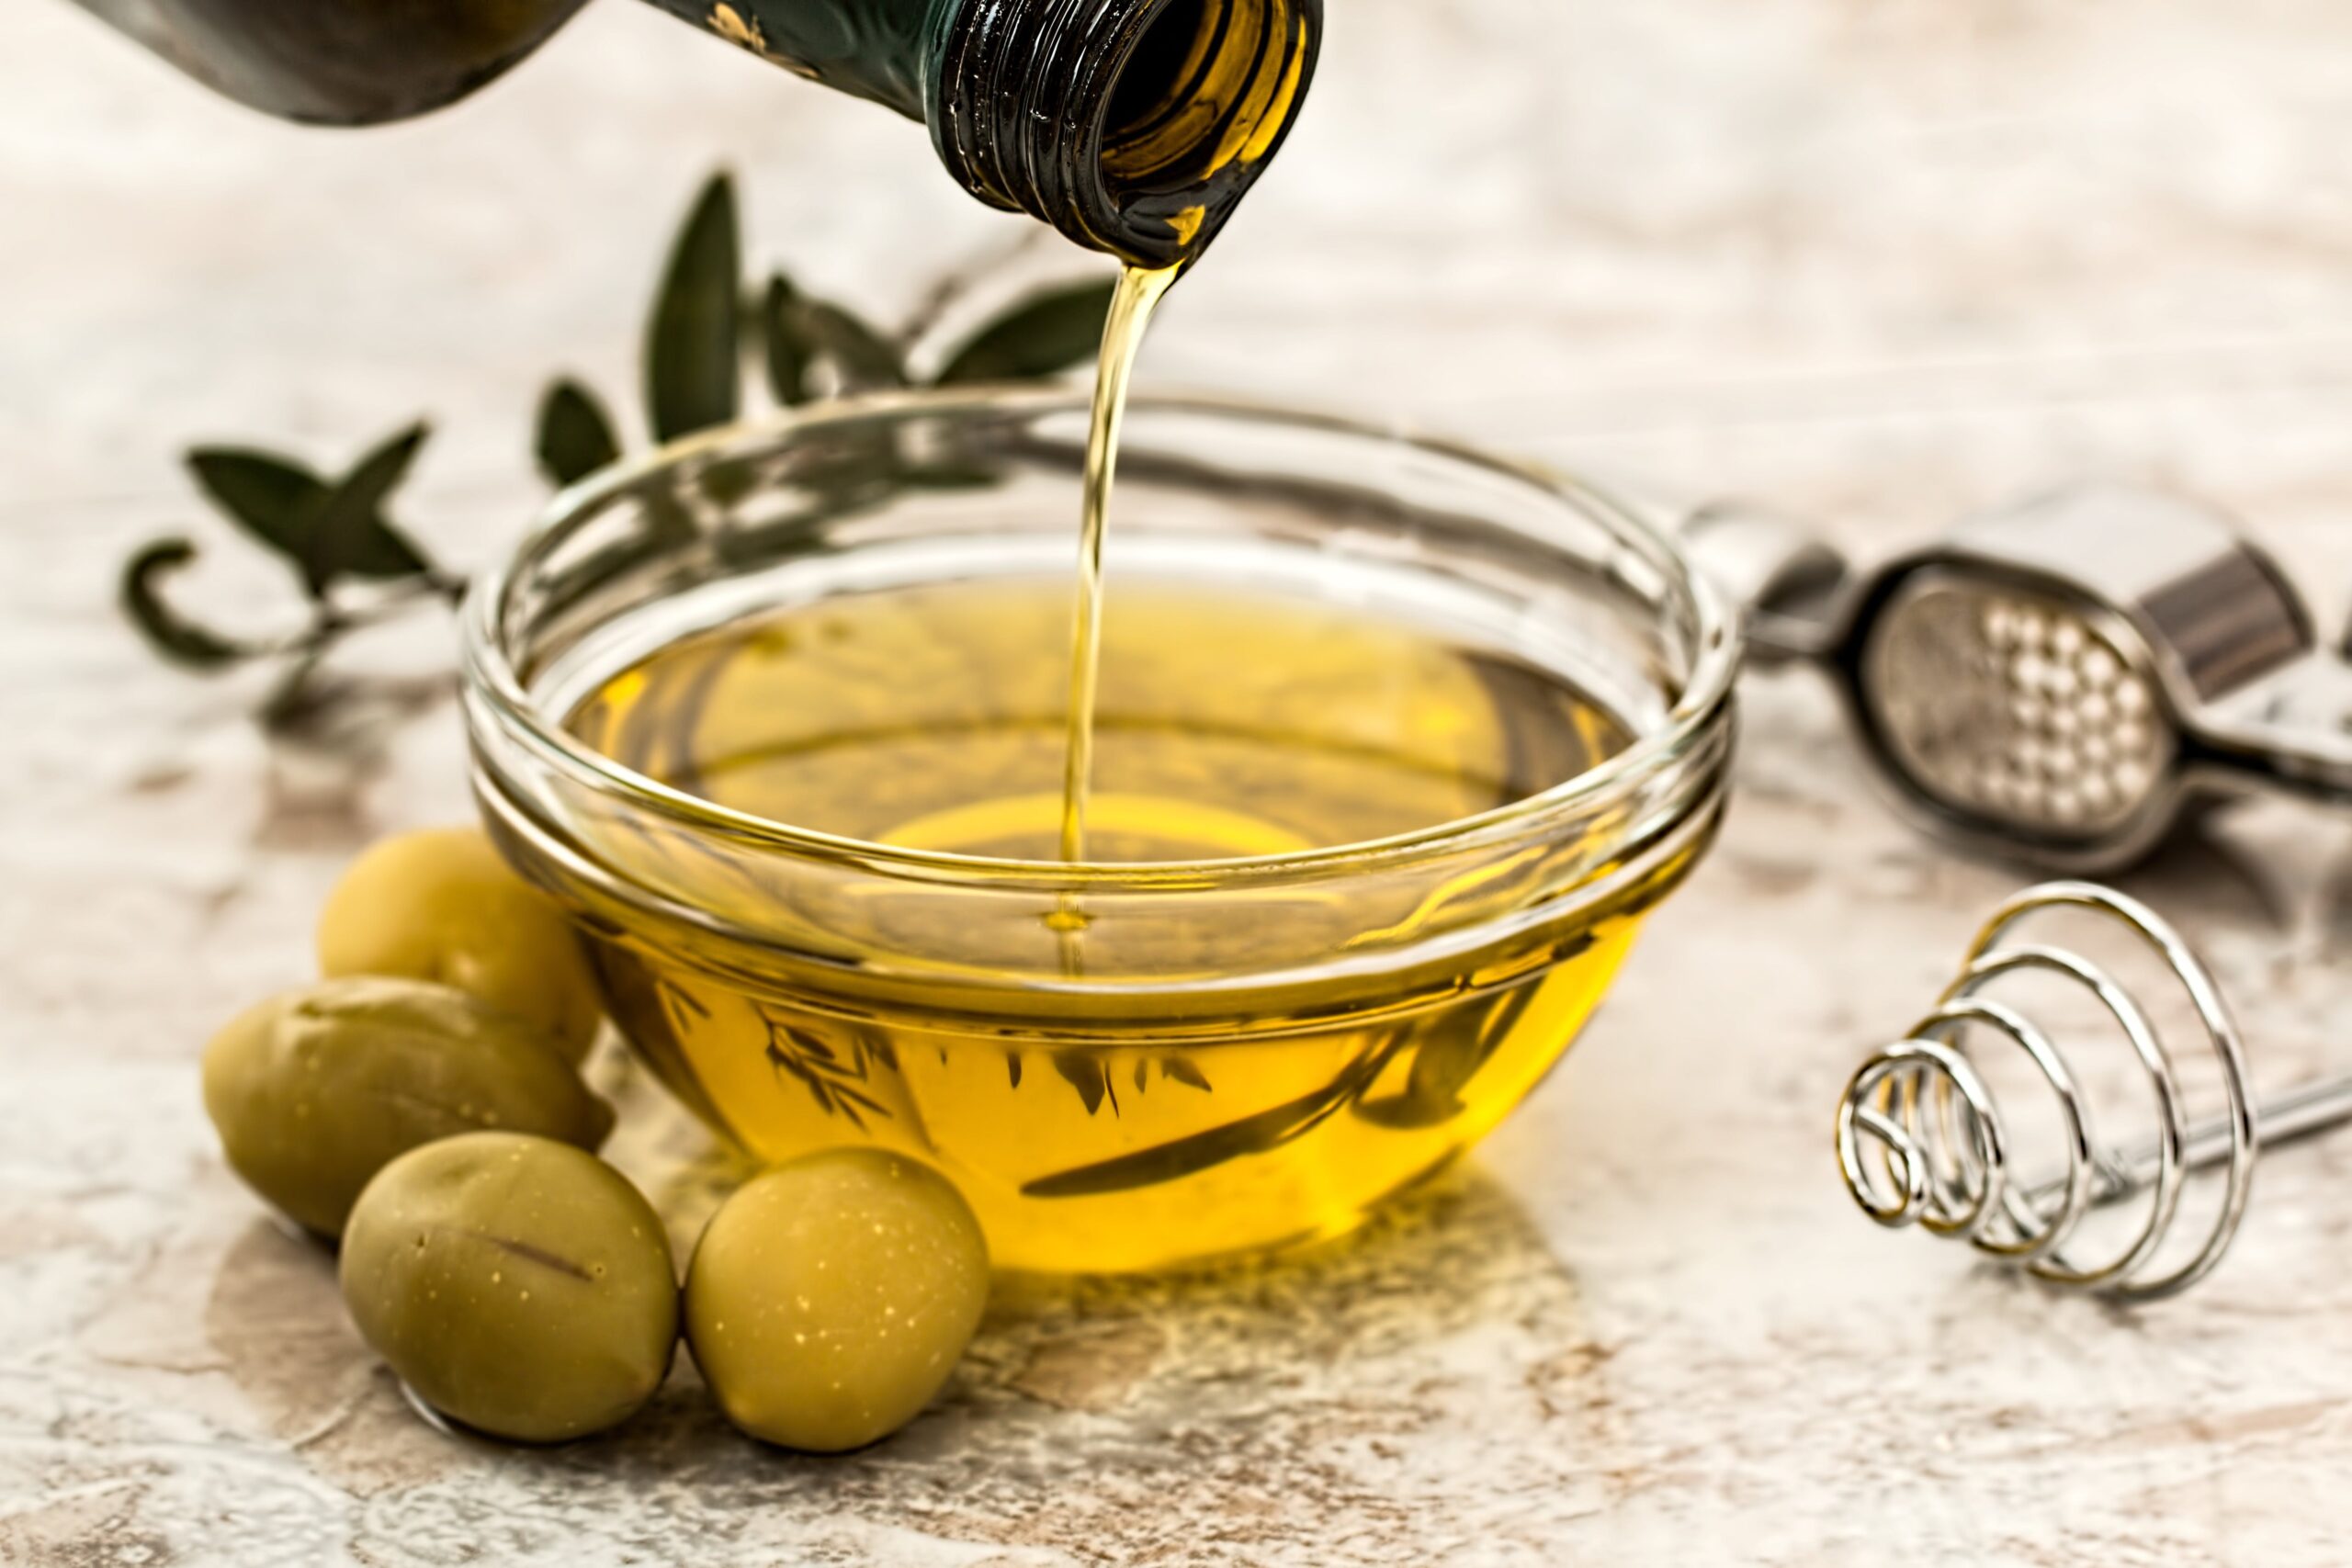 Croatian Olive Oil